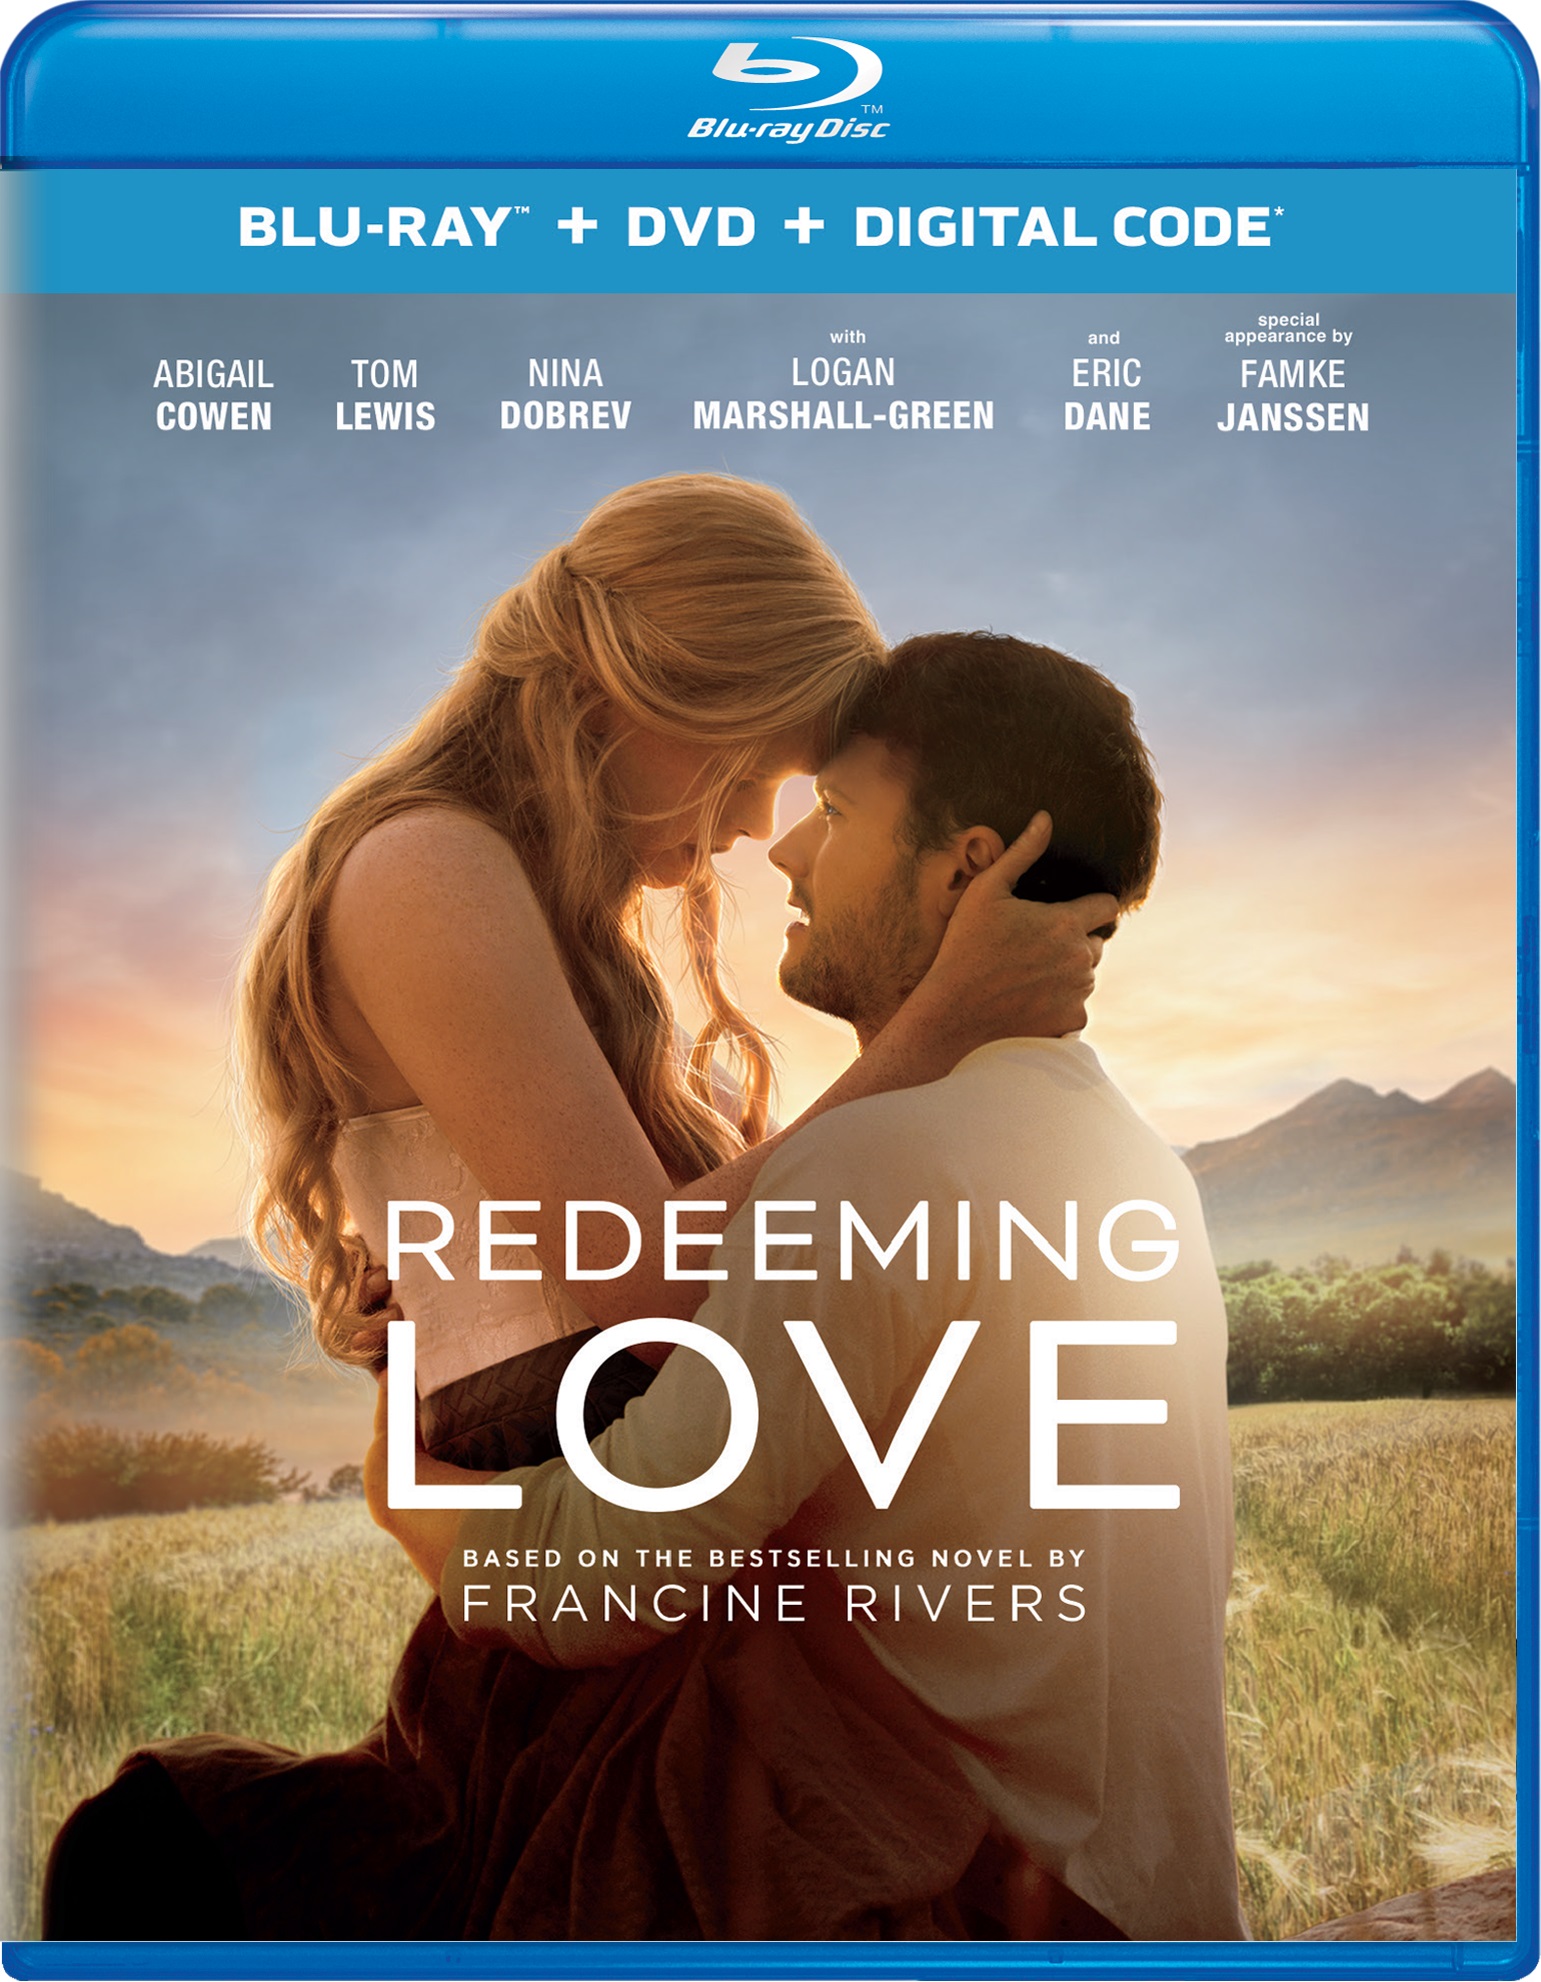 Redeeming Love (with DVD) - Blu-ray [ 2022 ]  - Western Movies On Blu-ray - Movies On GRUV